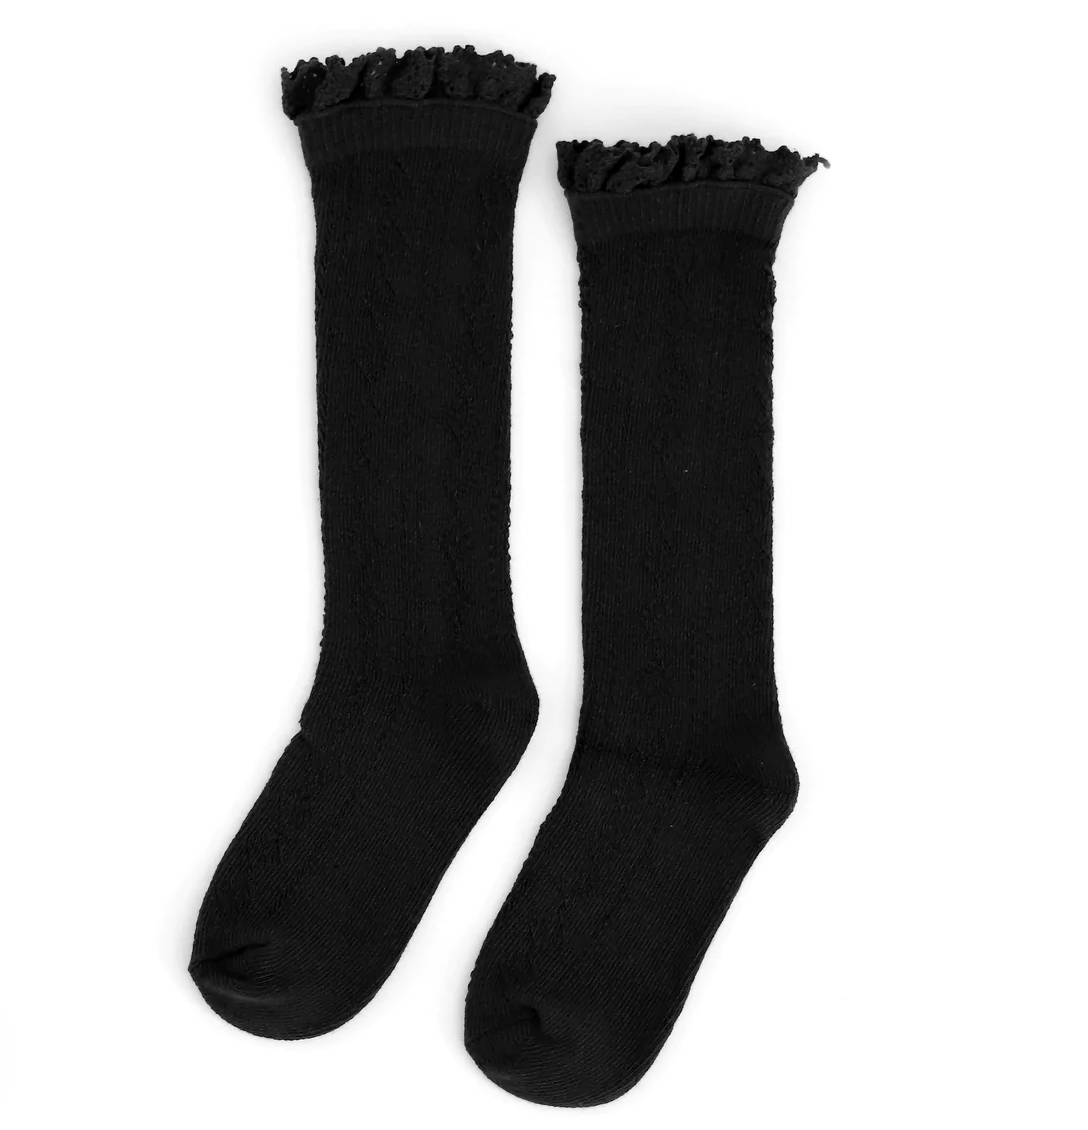 Little Stocking Co. Fancy Lace Top Knee High Socks- Black Lace